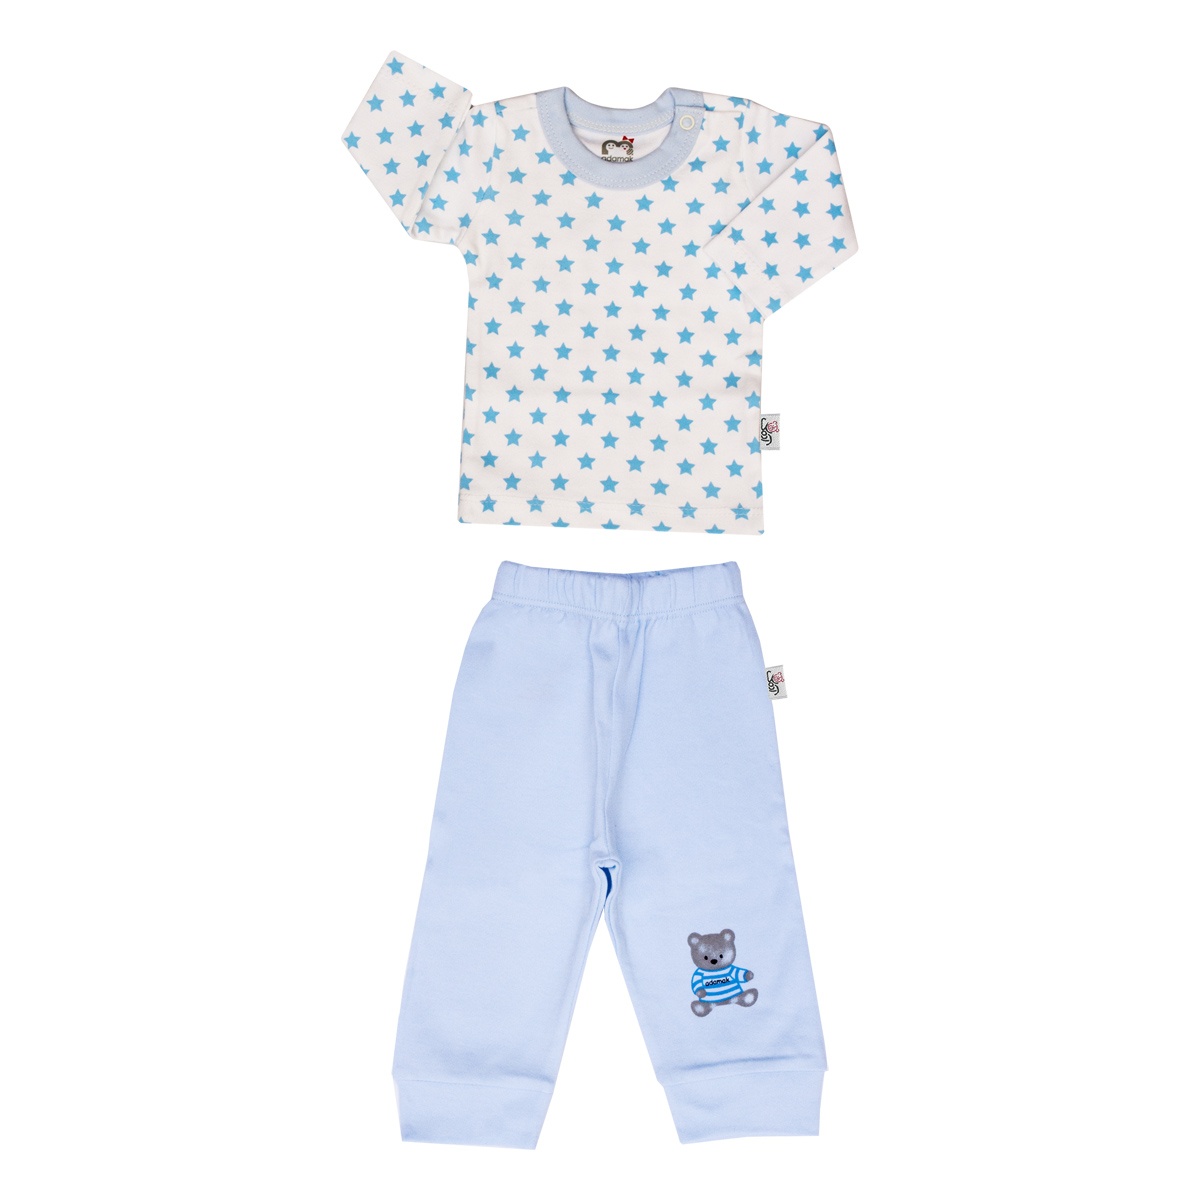 ست تی شرت و شلوار نوزادی پسرانه آدمک طرح ستاره آبی کد 04 